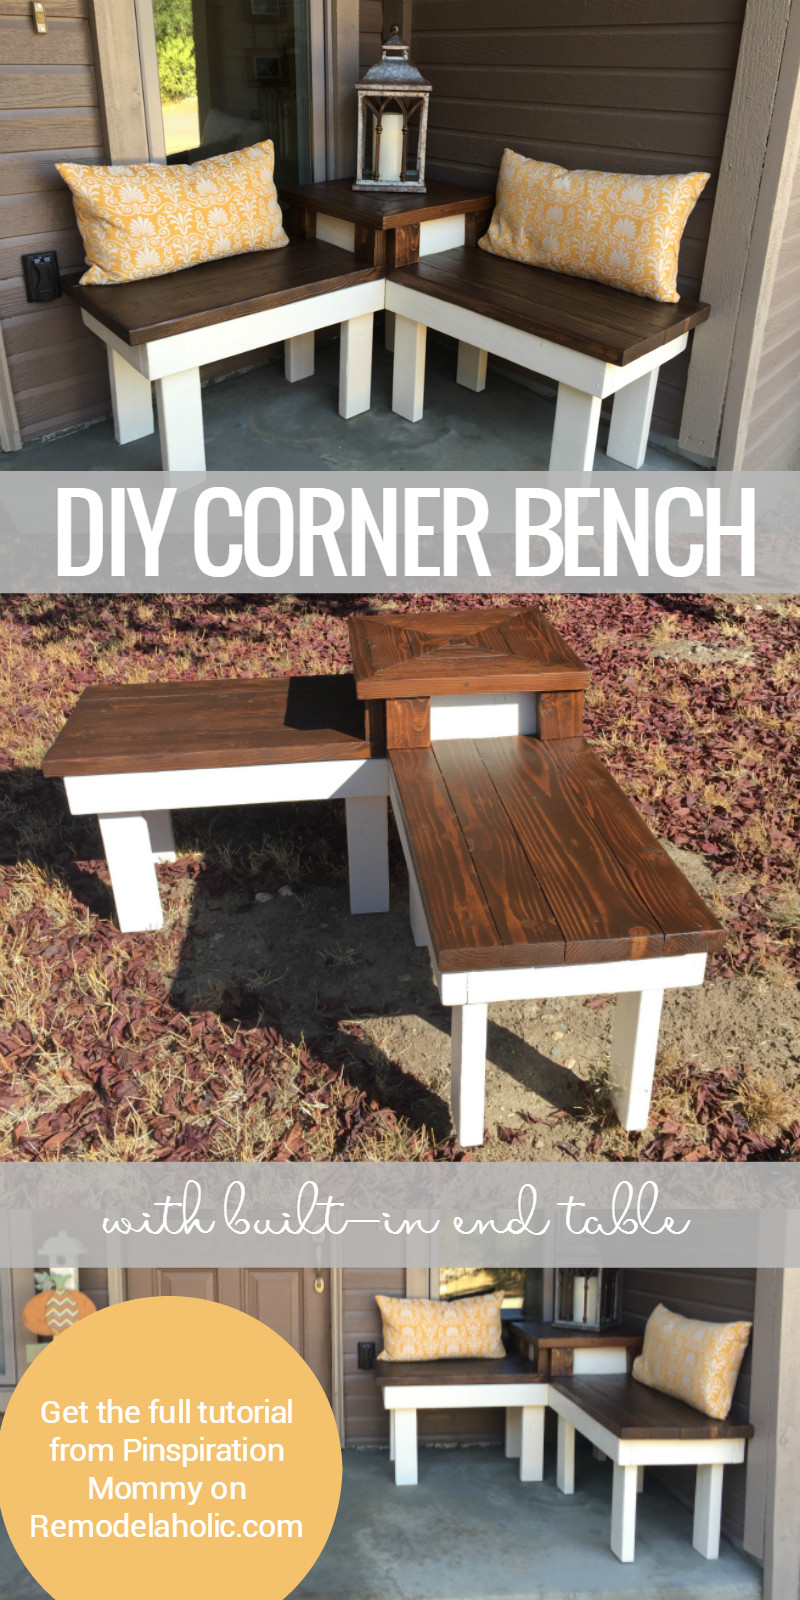 DIY Outdoor Corner Bench
 Remodelaholic